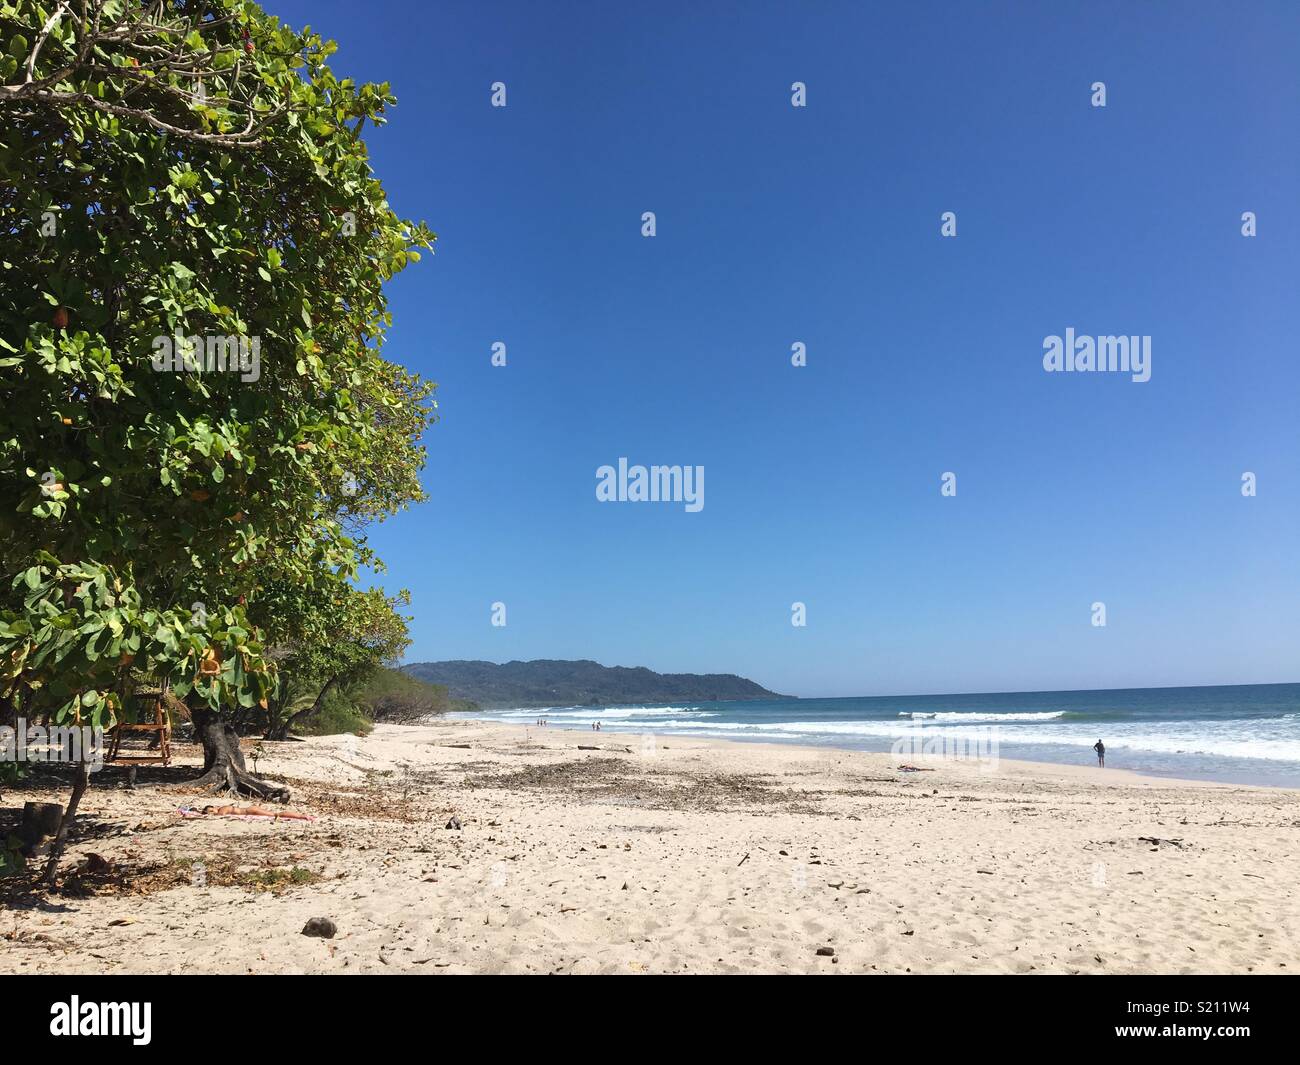 Santa Teresa beach in Costa Rica Stock Photo